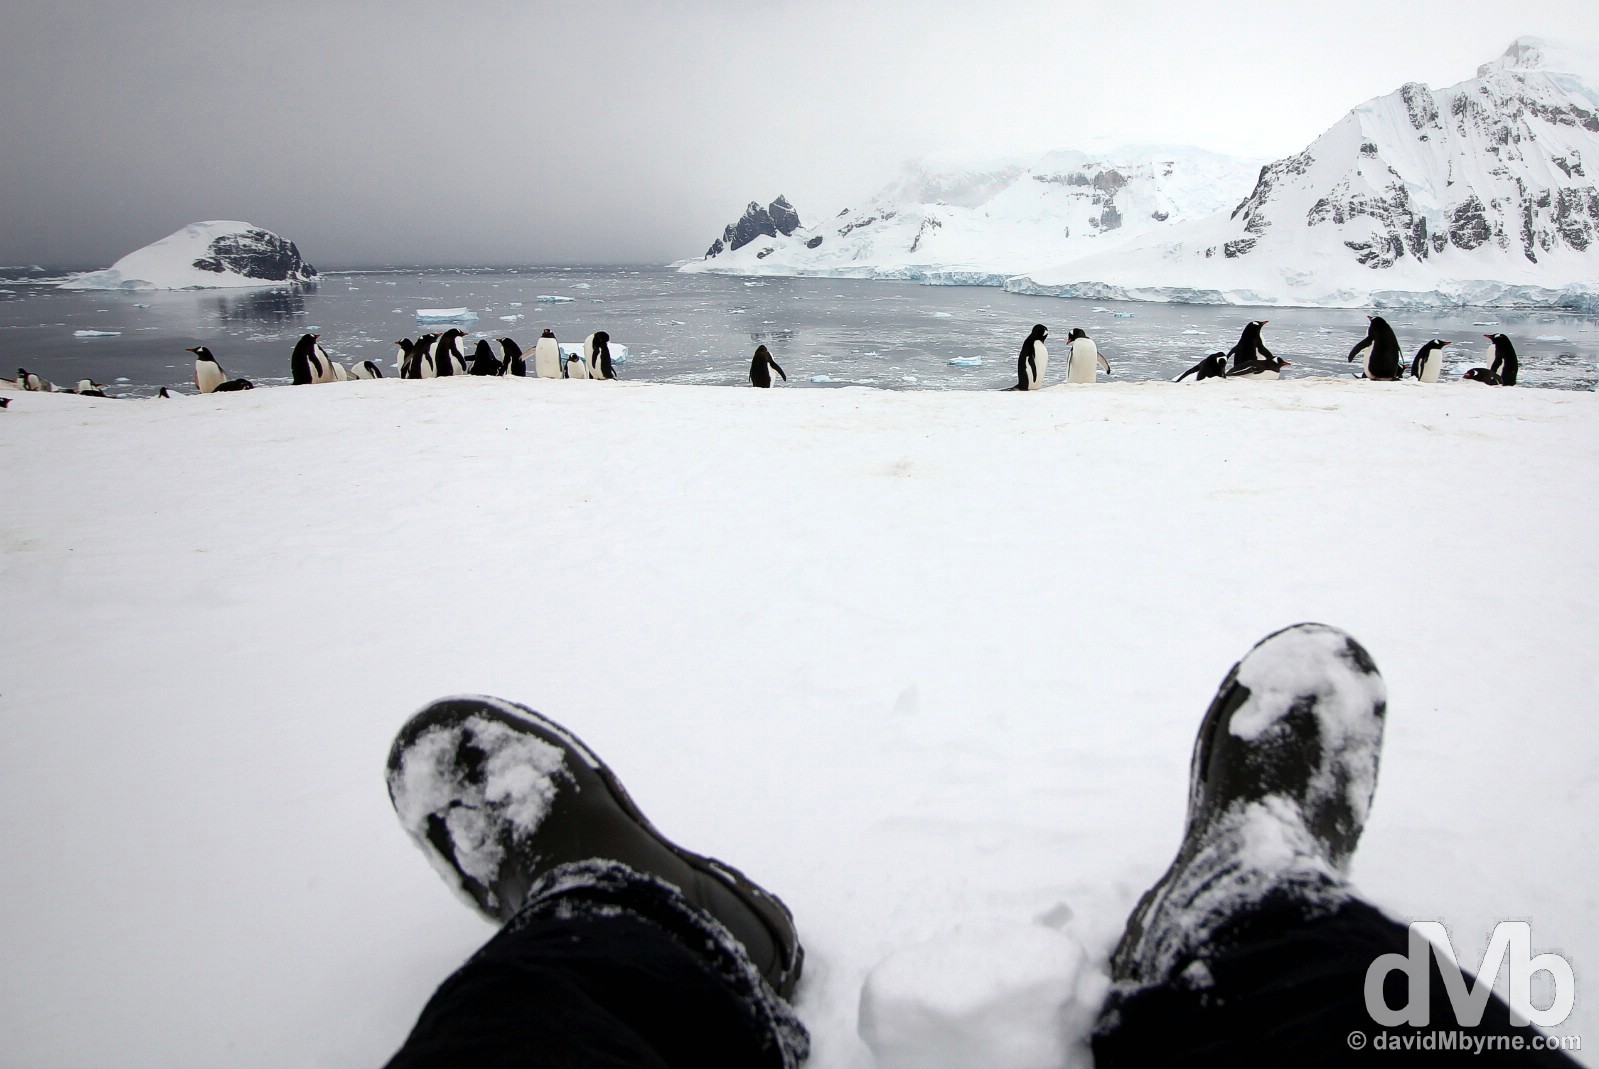 Hanging with the penguins on Danco Island, Antarctica. December 2, 2015. 